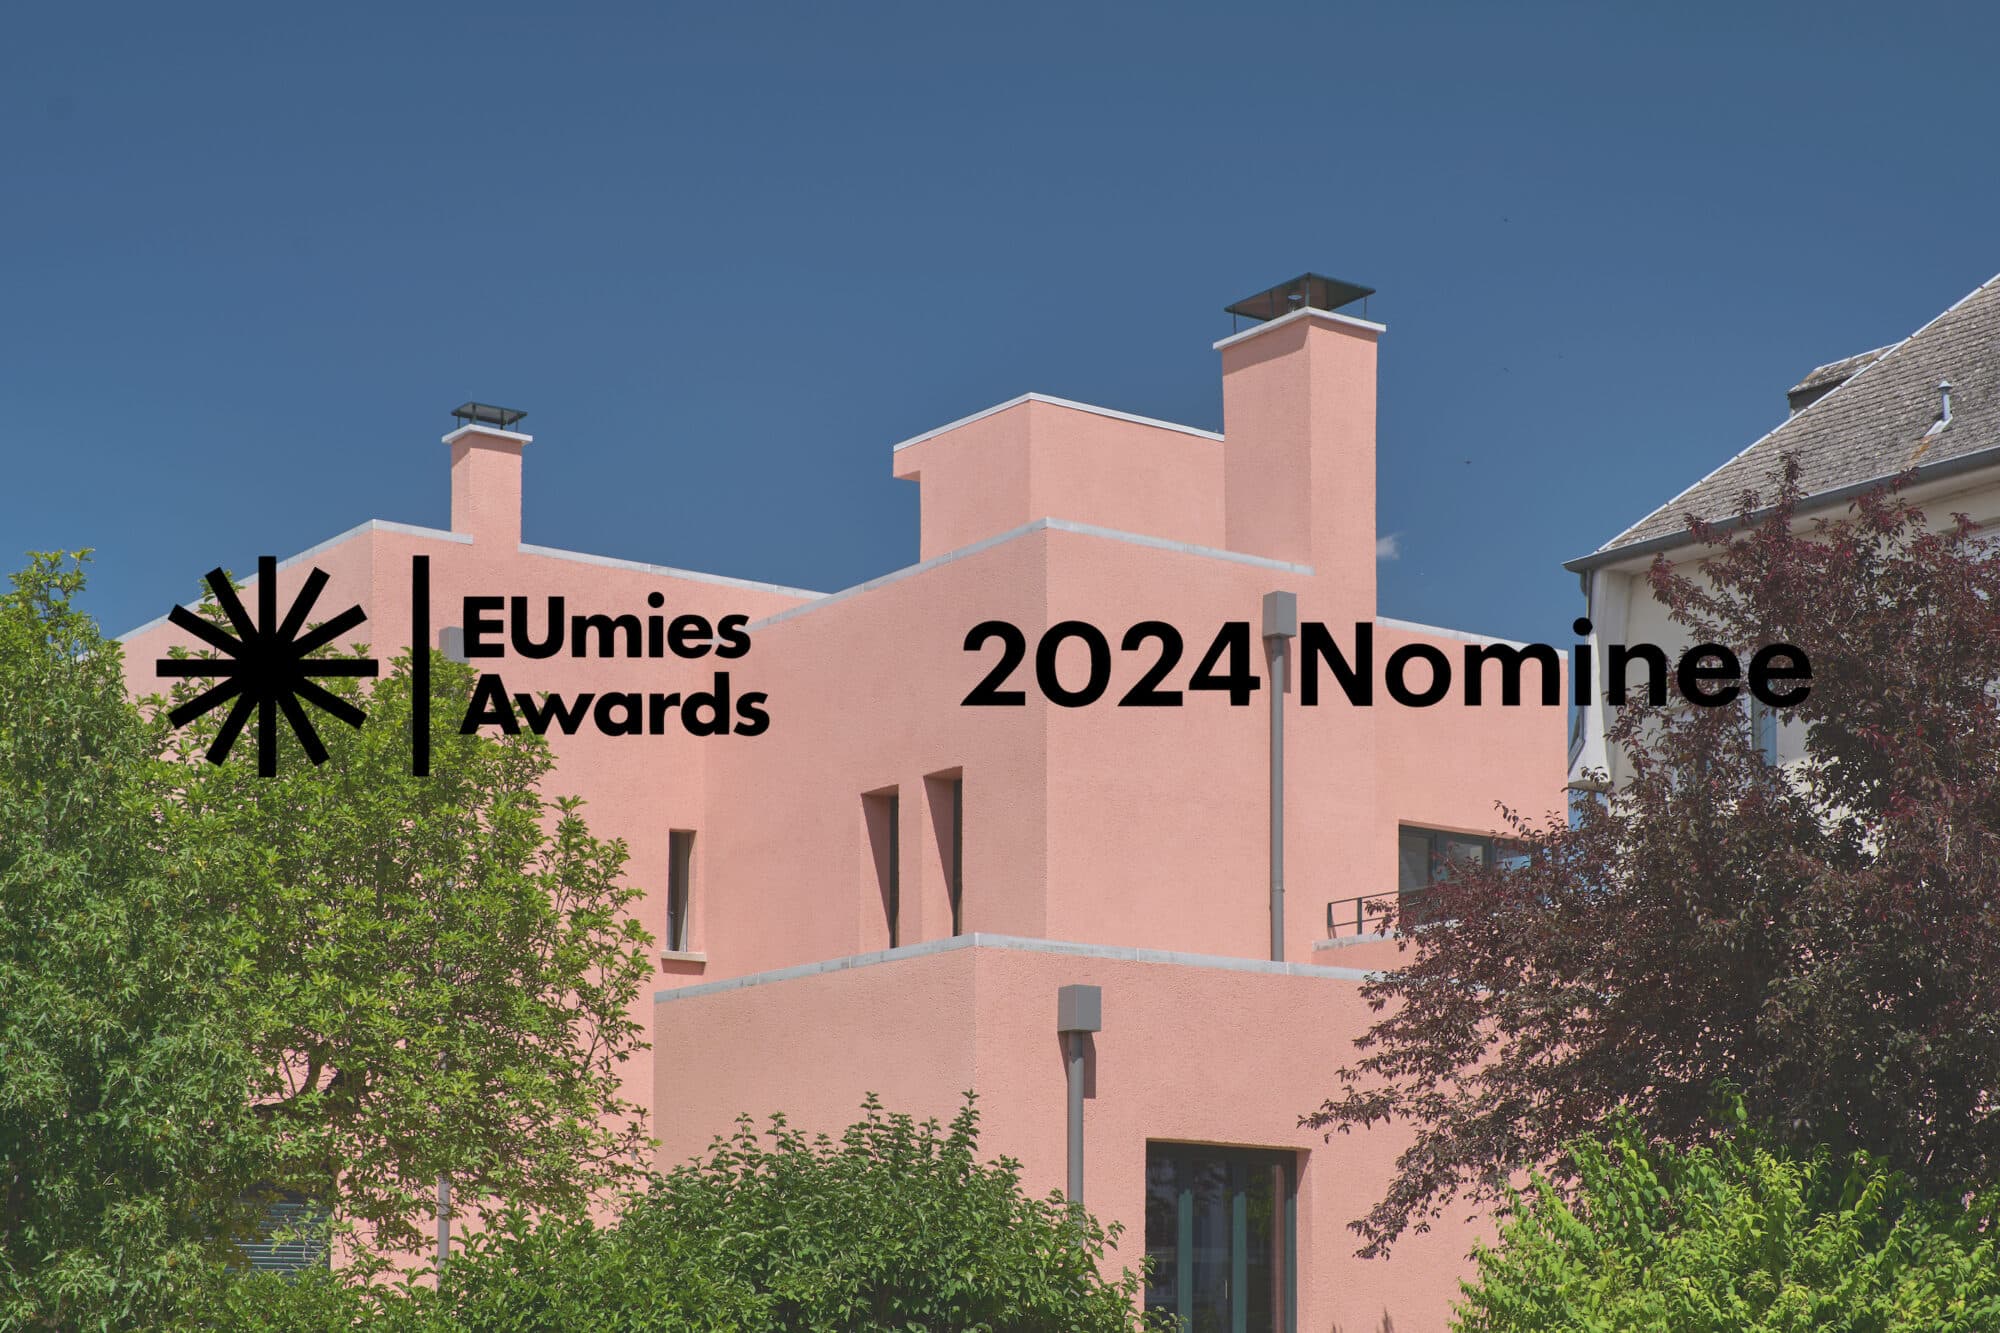 EU miesaward / Nomination 2024